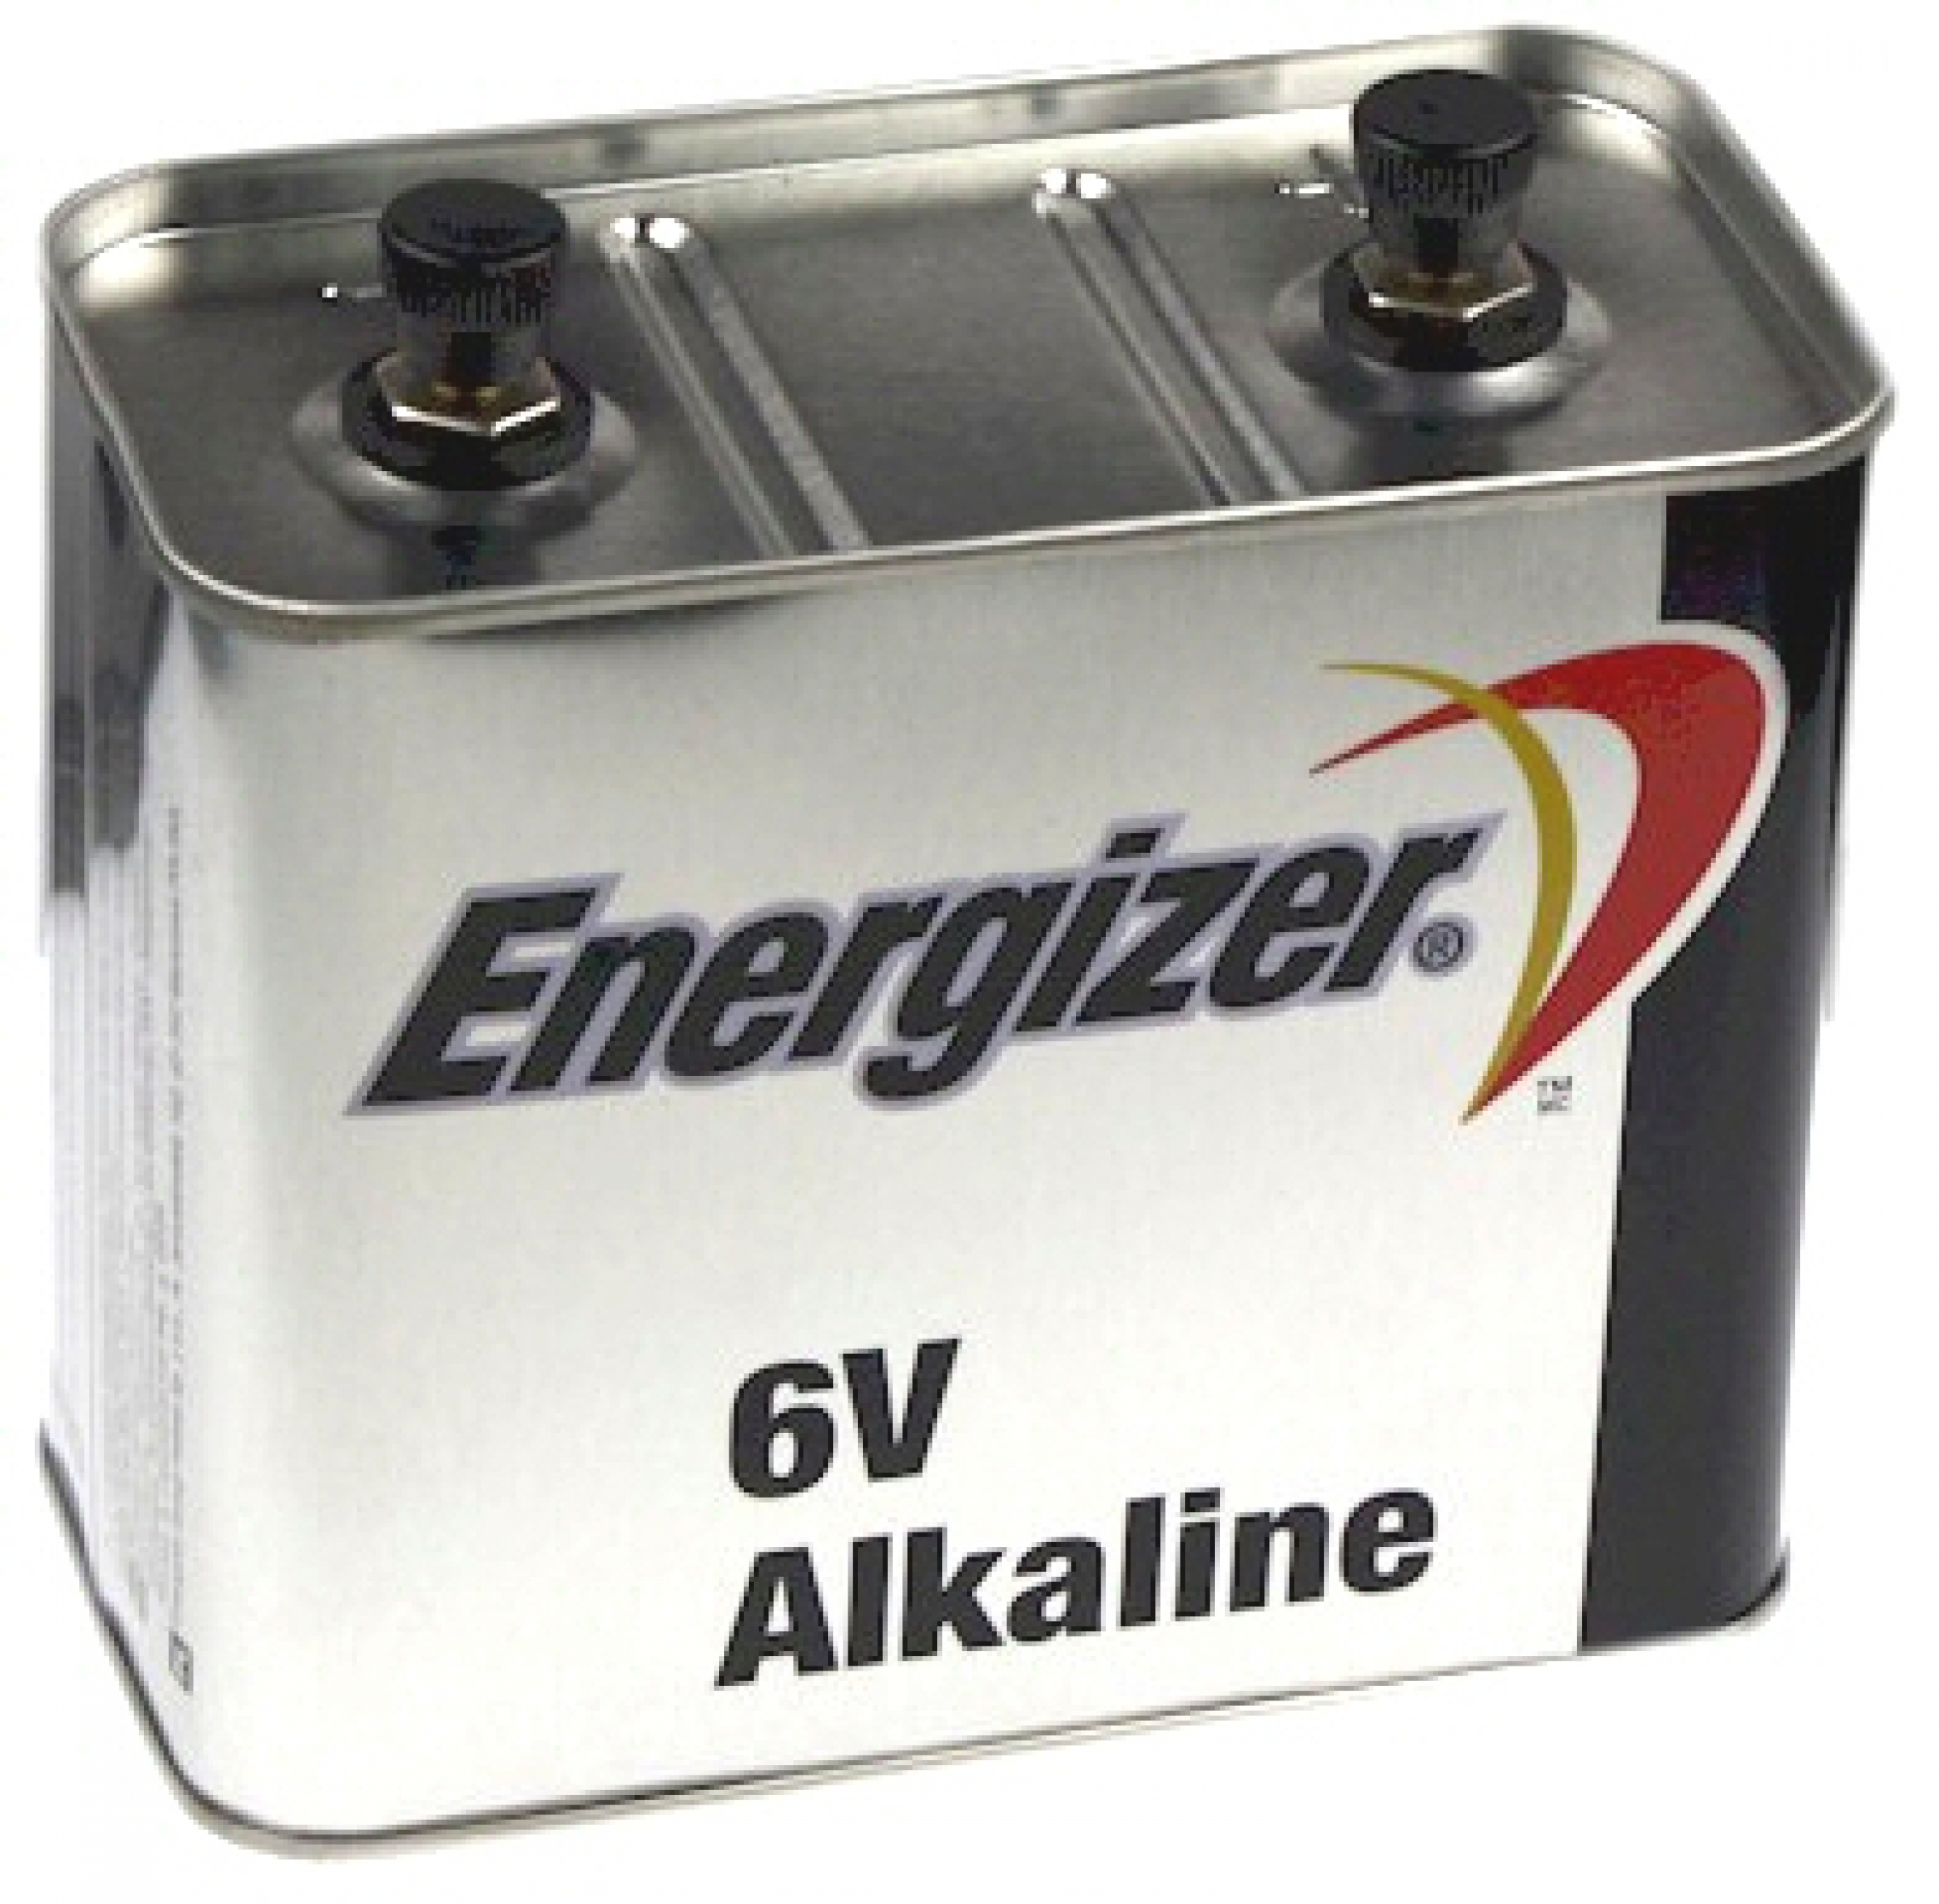 VOLTRONIC SHOP - Energizer Blockbatterie Alkaline 4LR25